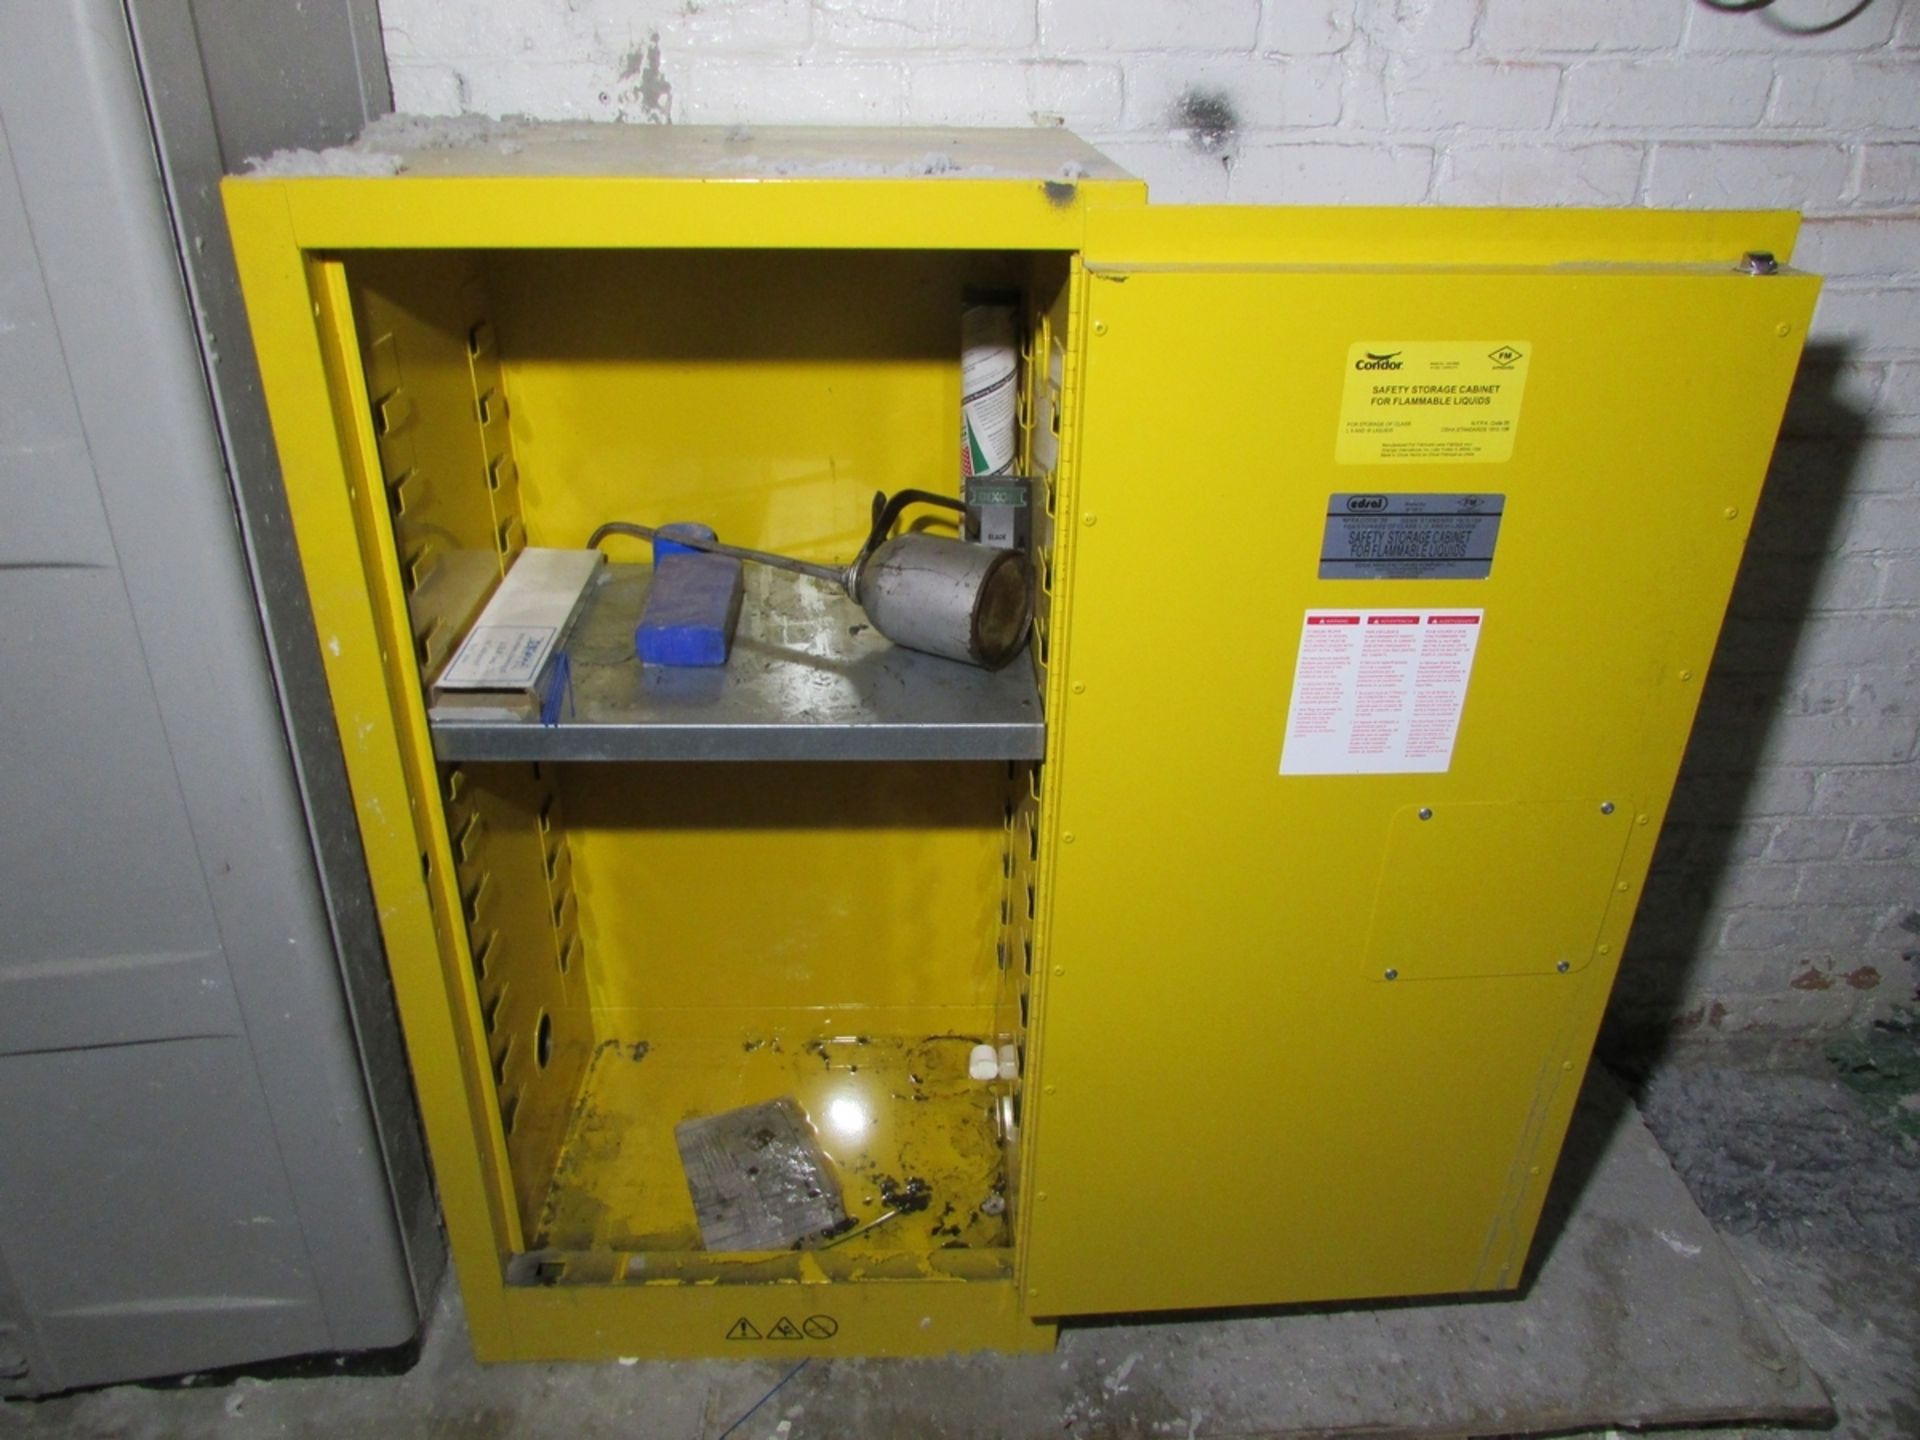 Condor 42X466A 16-Gallon Flammable Liquid Storage Cabinet - Image 2 of 3